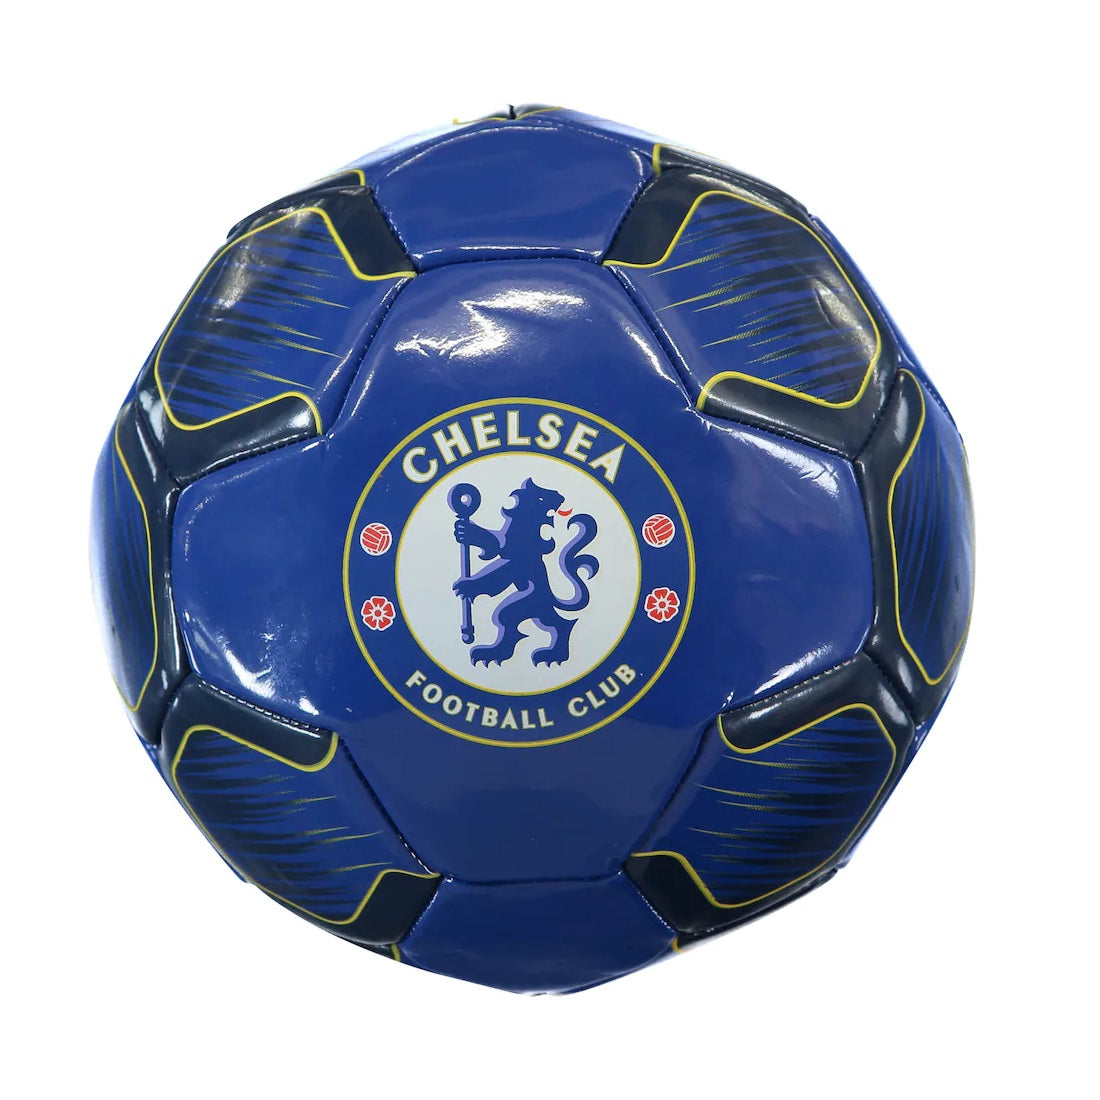 Chelsea Nemesis Crest Football (Size 5)